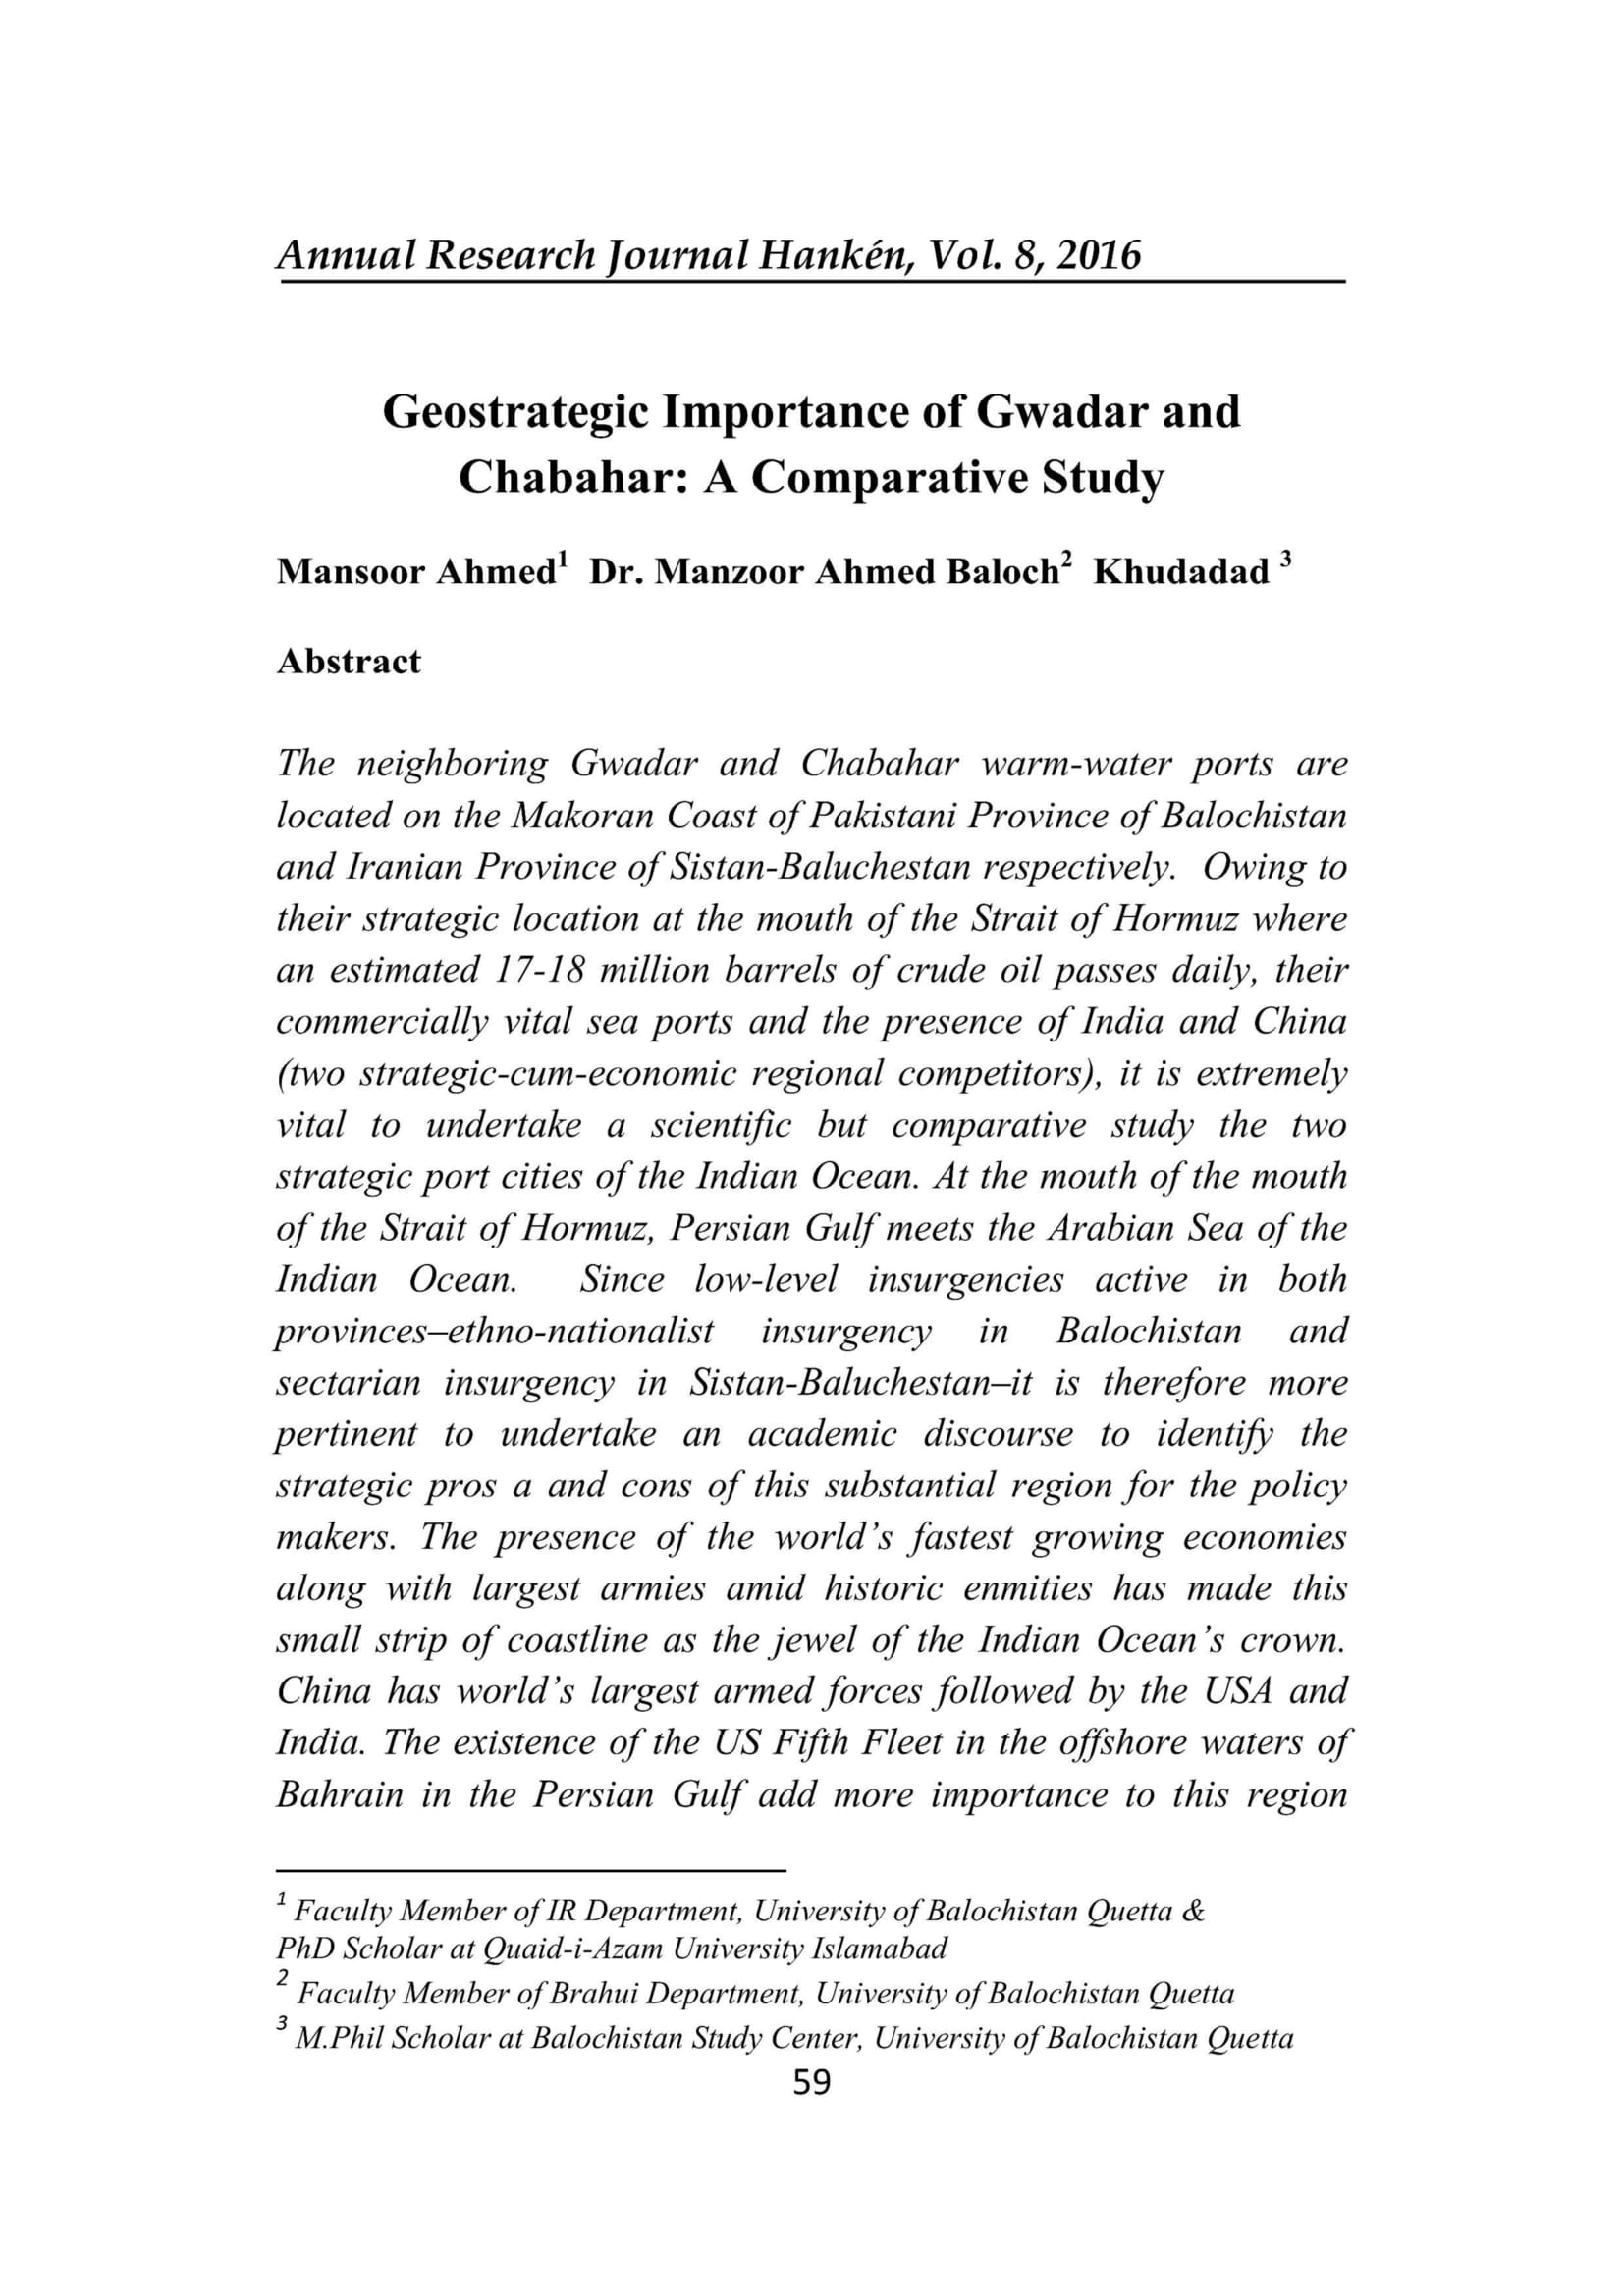 Geostrategic Importance of Gwadar and Chabahar: A Comparative Study